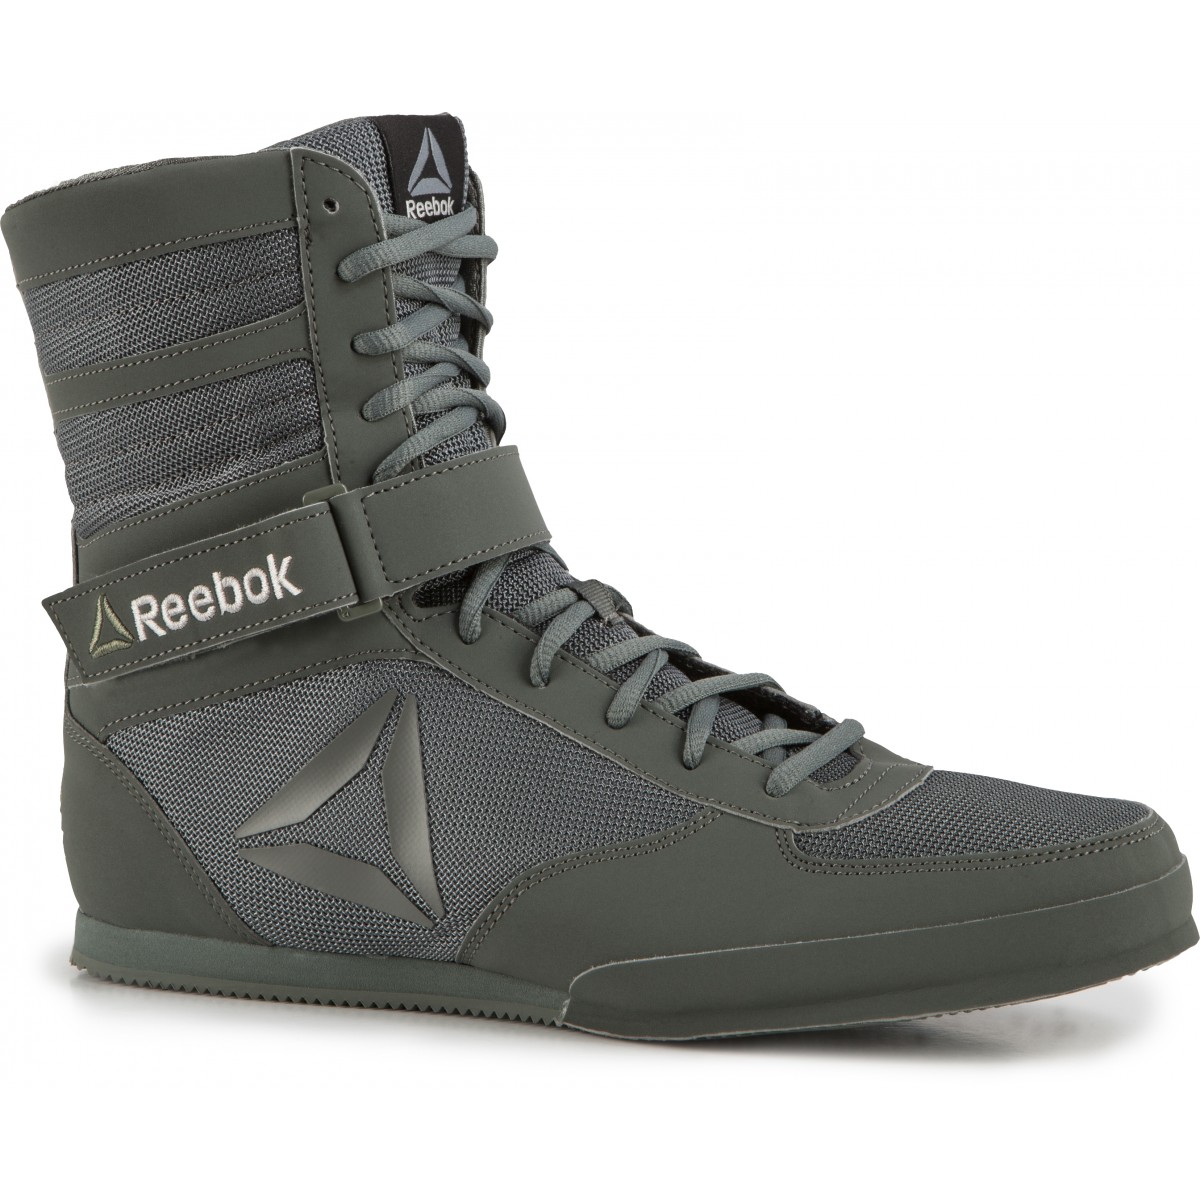 Reebok Renegade Pro Boxing Boots